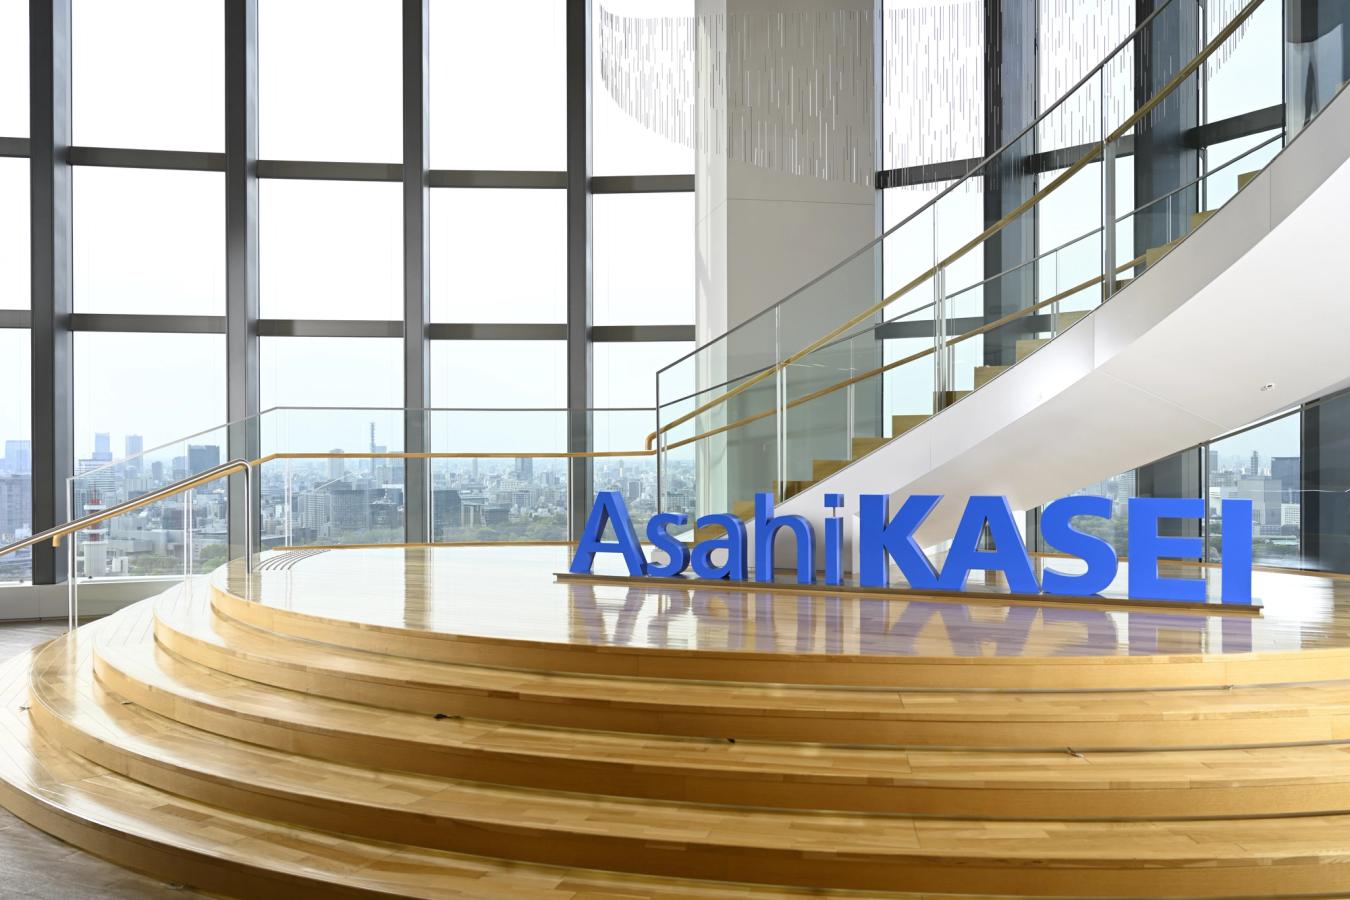 Asahi Kasei Corporation, 직원의 자율적 성장 및 커리어 개발을 지원하는 학습 플랫폼 구축 